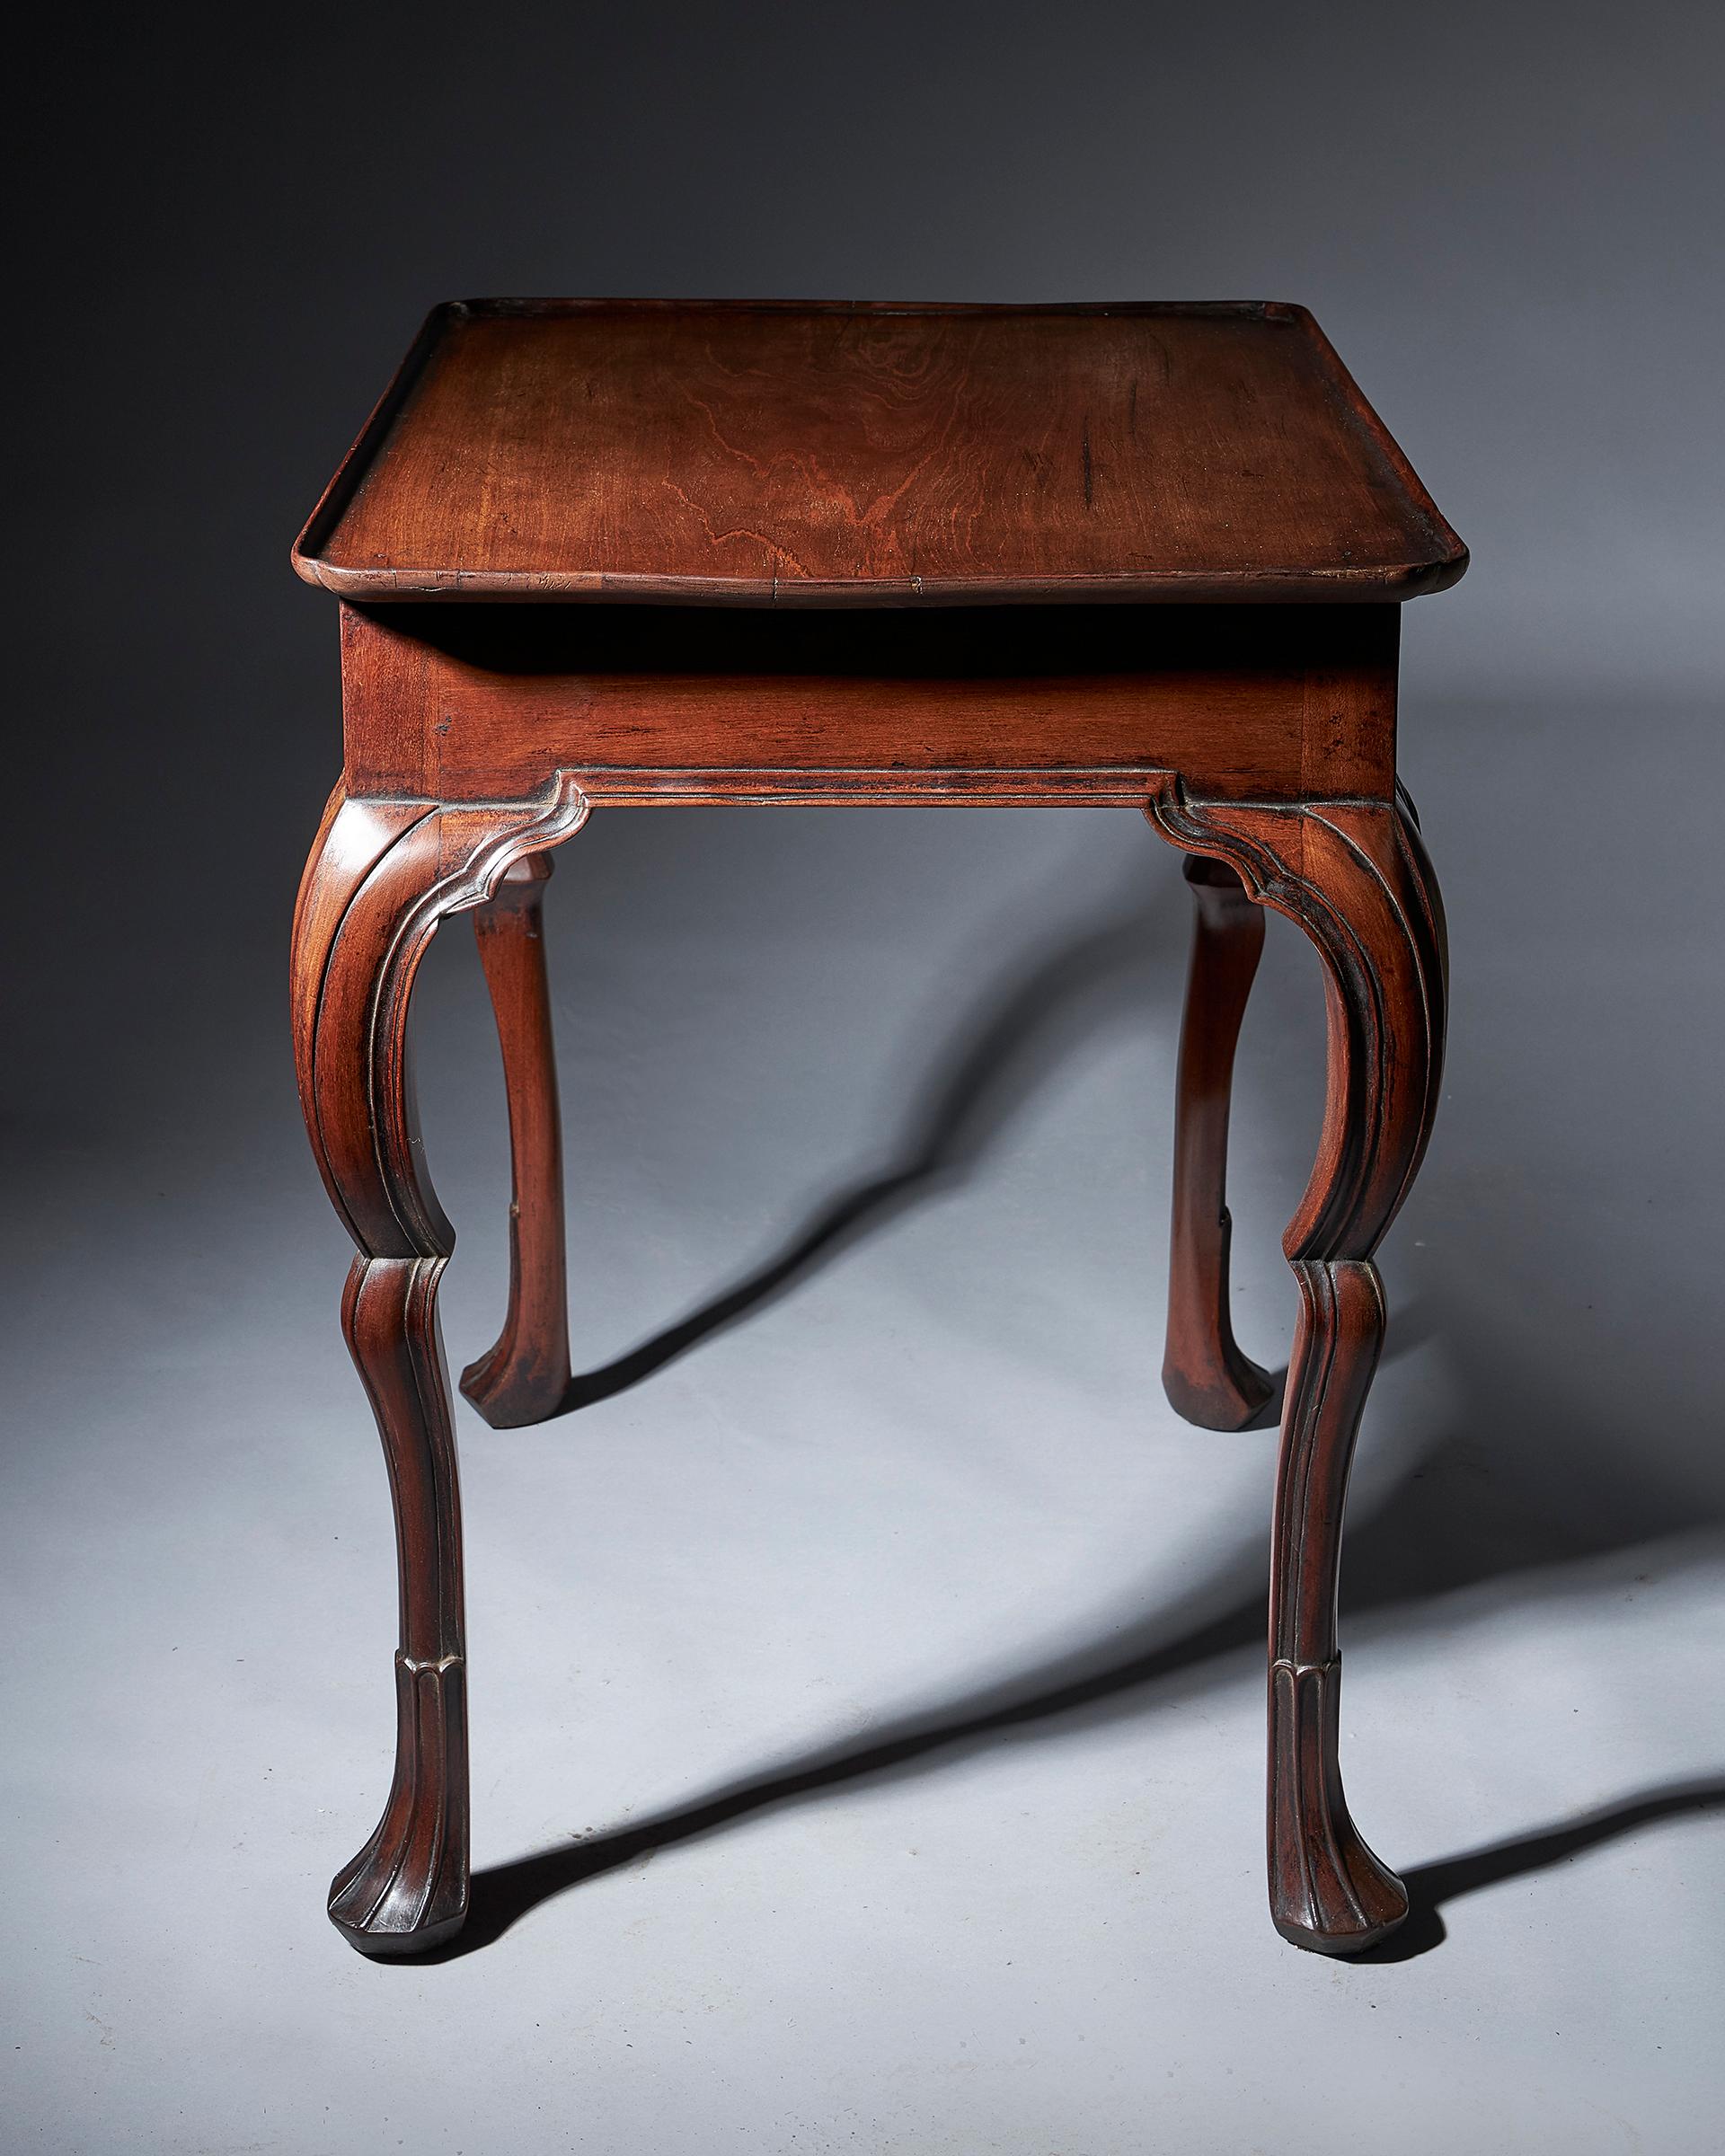 18th Century and Earlier Important 18th Century Mahogany Irish Silver or Tea Table, circa 1740-1760